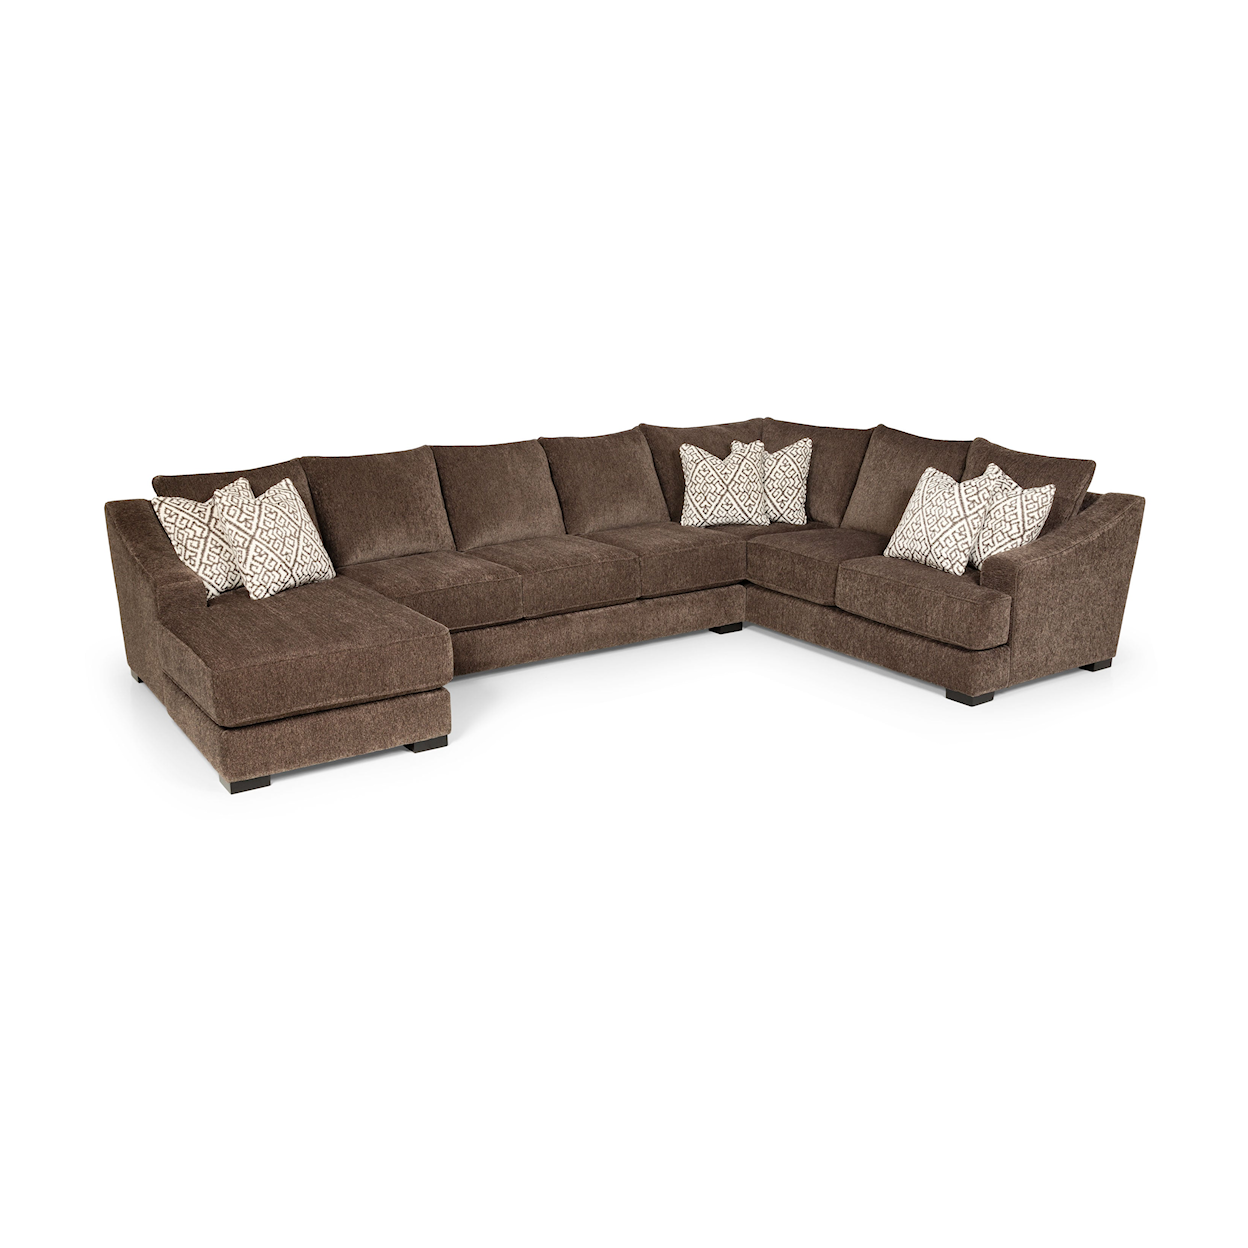 Stanton 376 Sectional Sofa